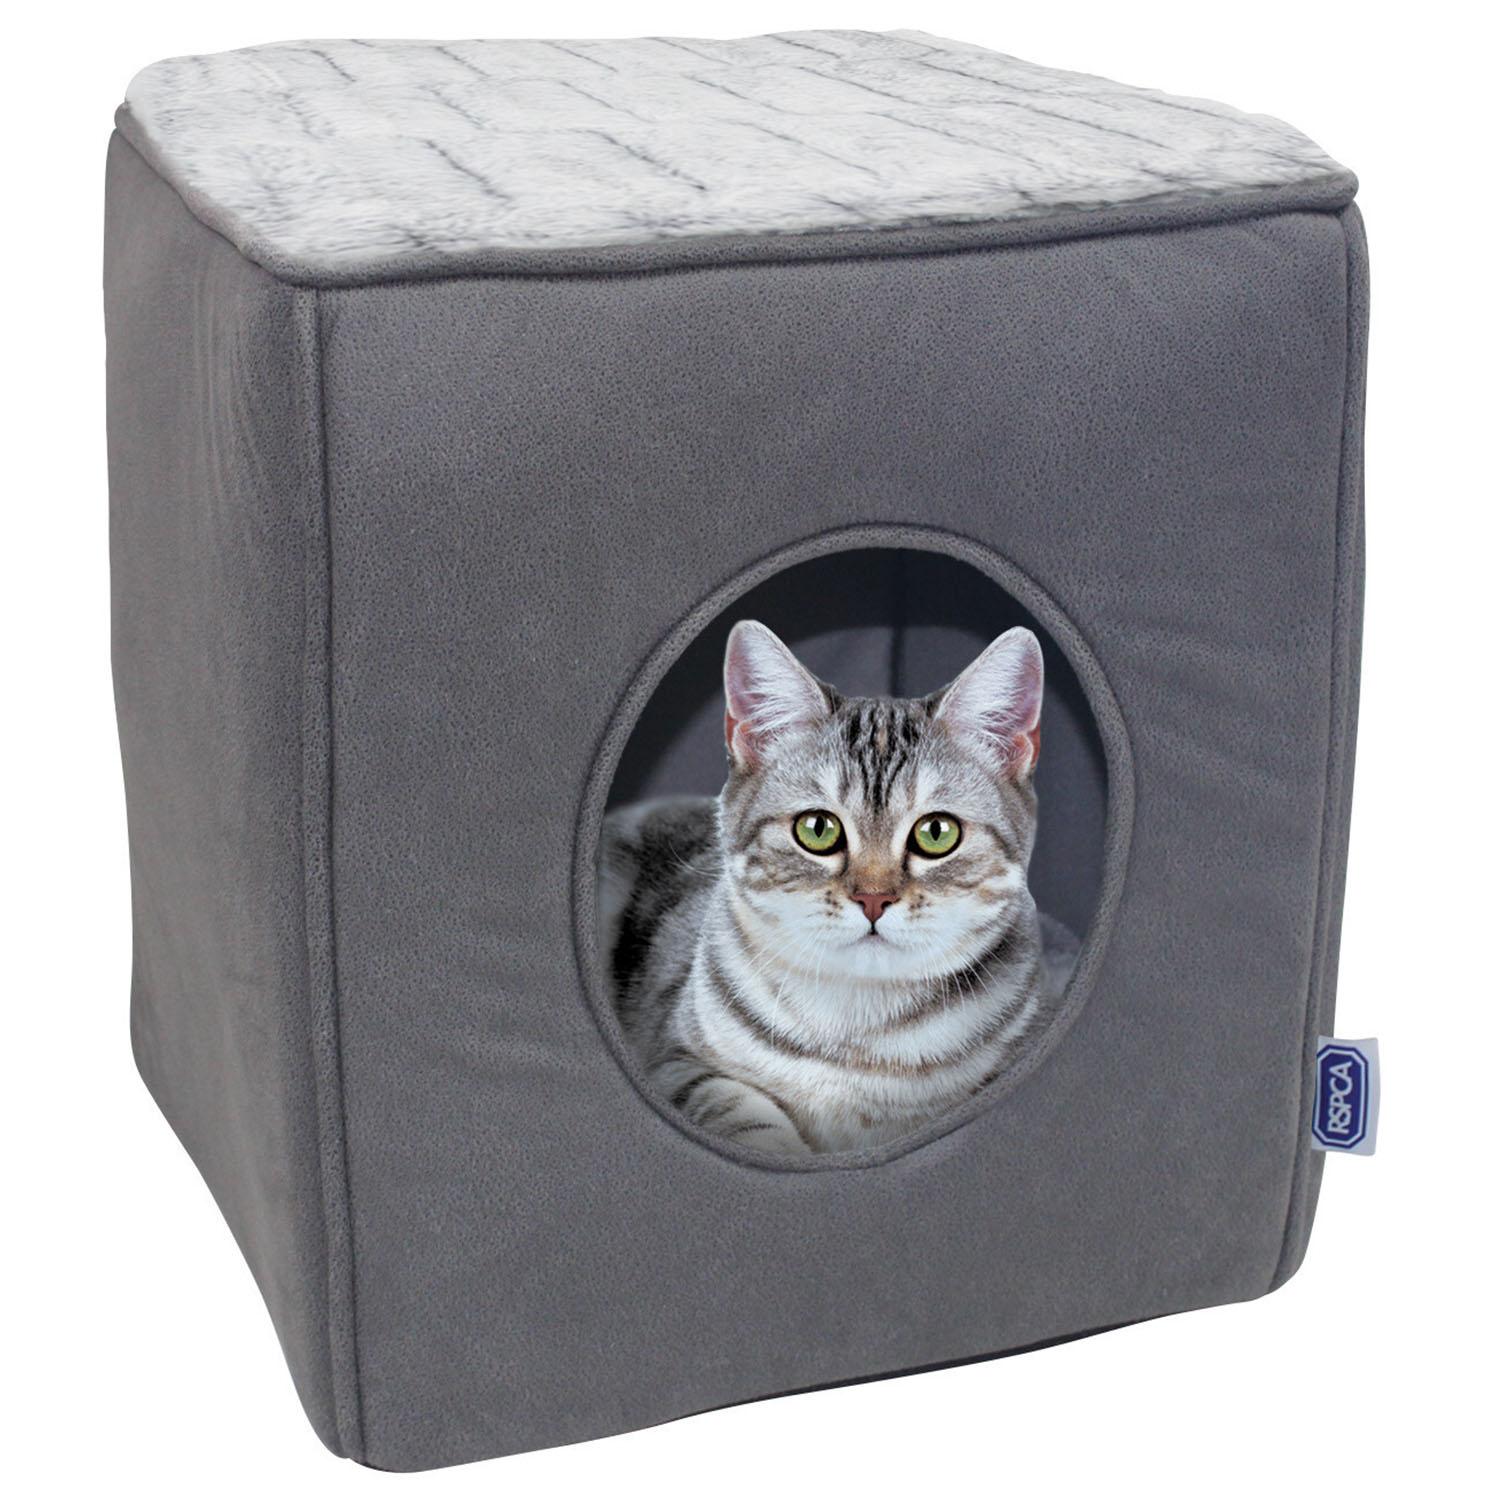 RSPCA Brick 3 in 1 Cat Cube - Grey Image 2